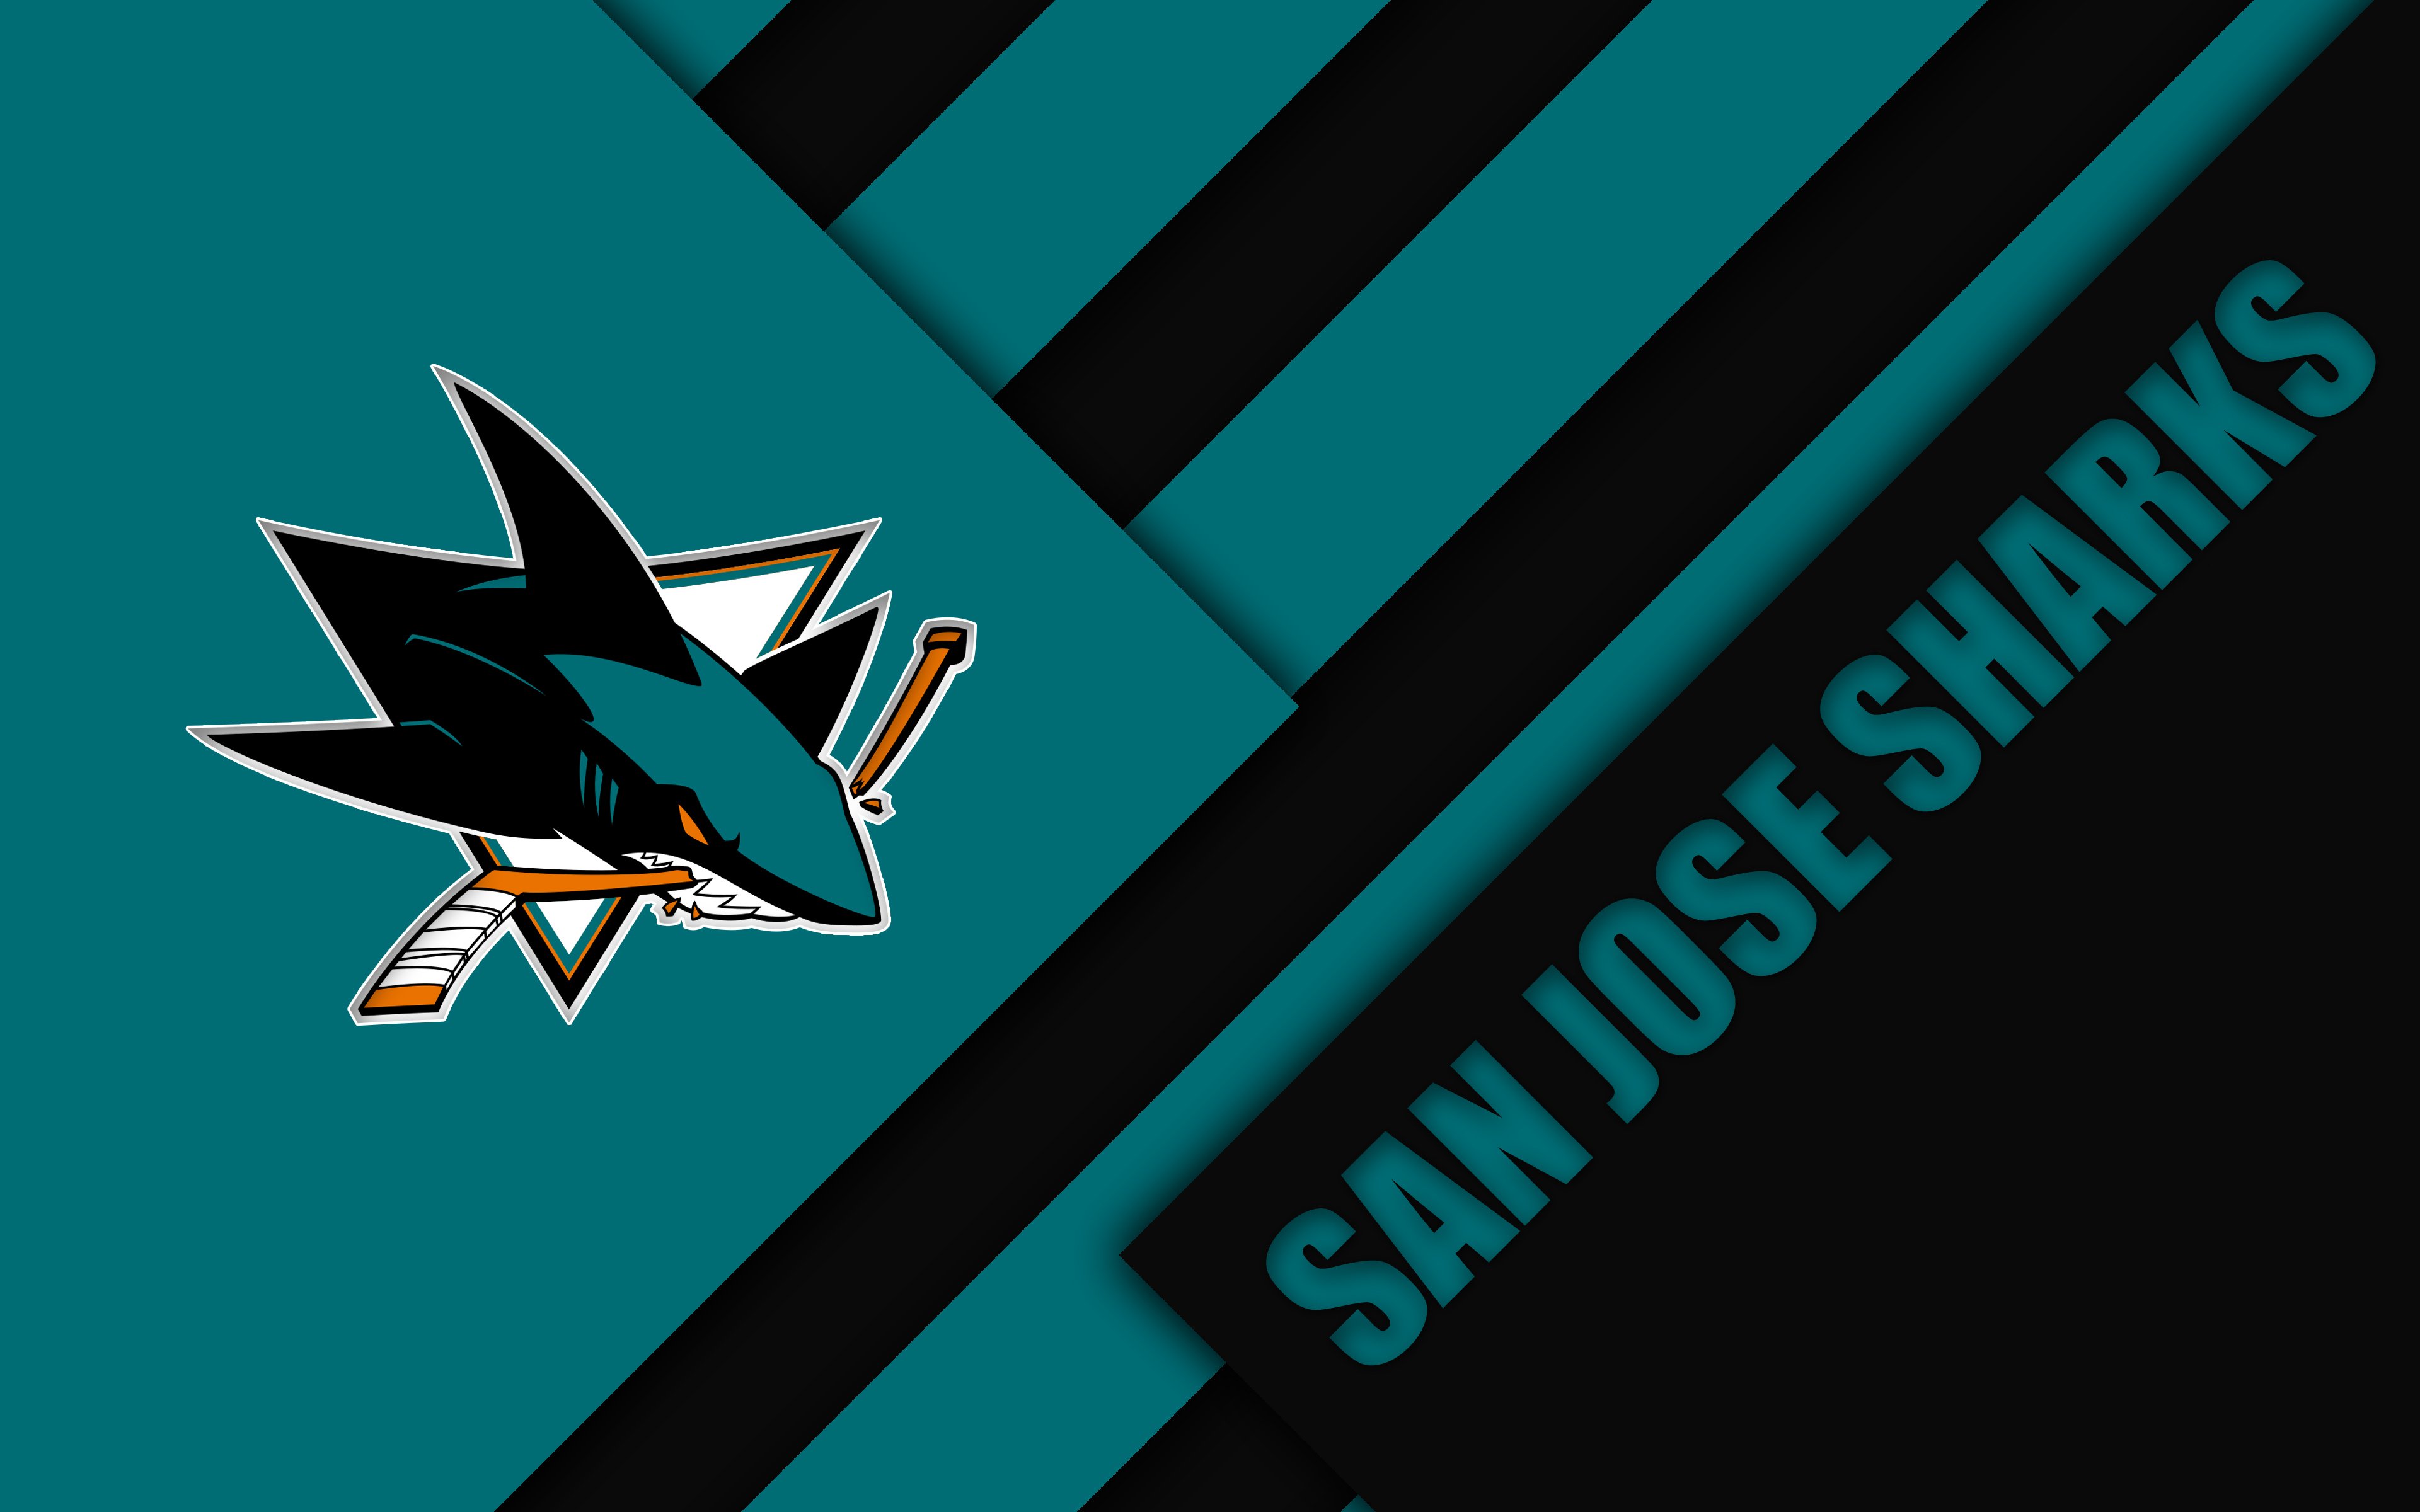 Wallpapers San Jose Sharks Ice Hockey 1920x1200, #1581095 #san jose sharks